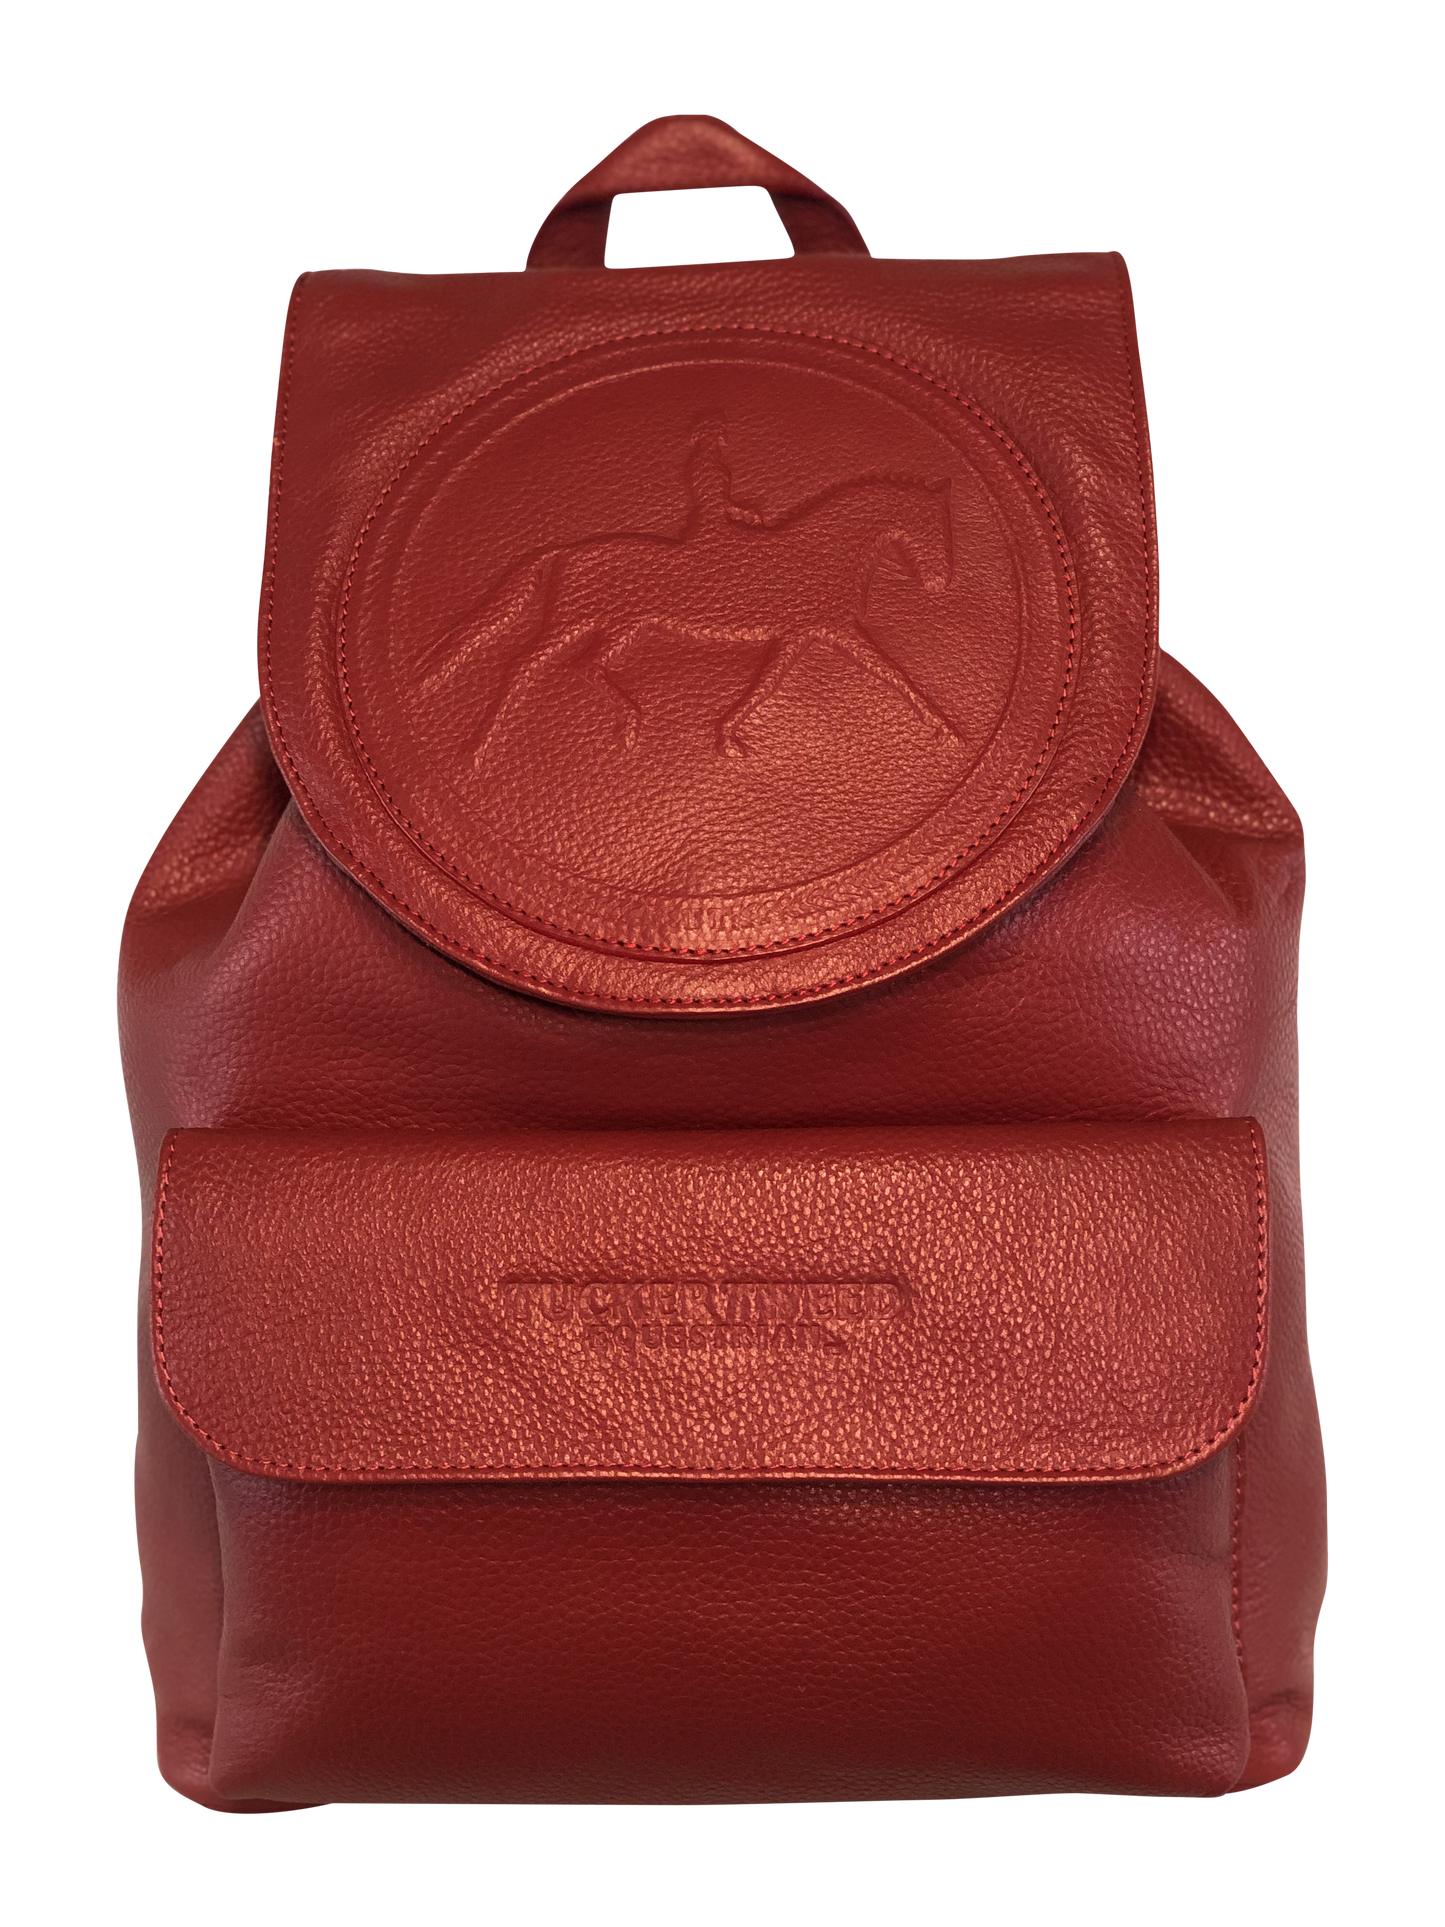 Tucker Tweed Equestrian Leather Handbags Dressage Red Brandywine Backpack: Dressage